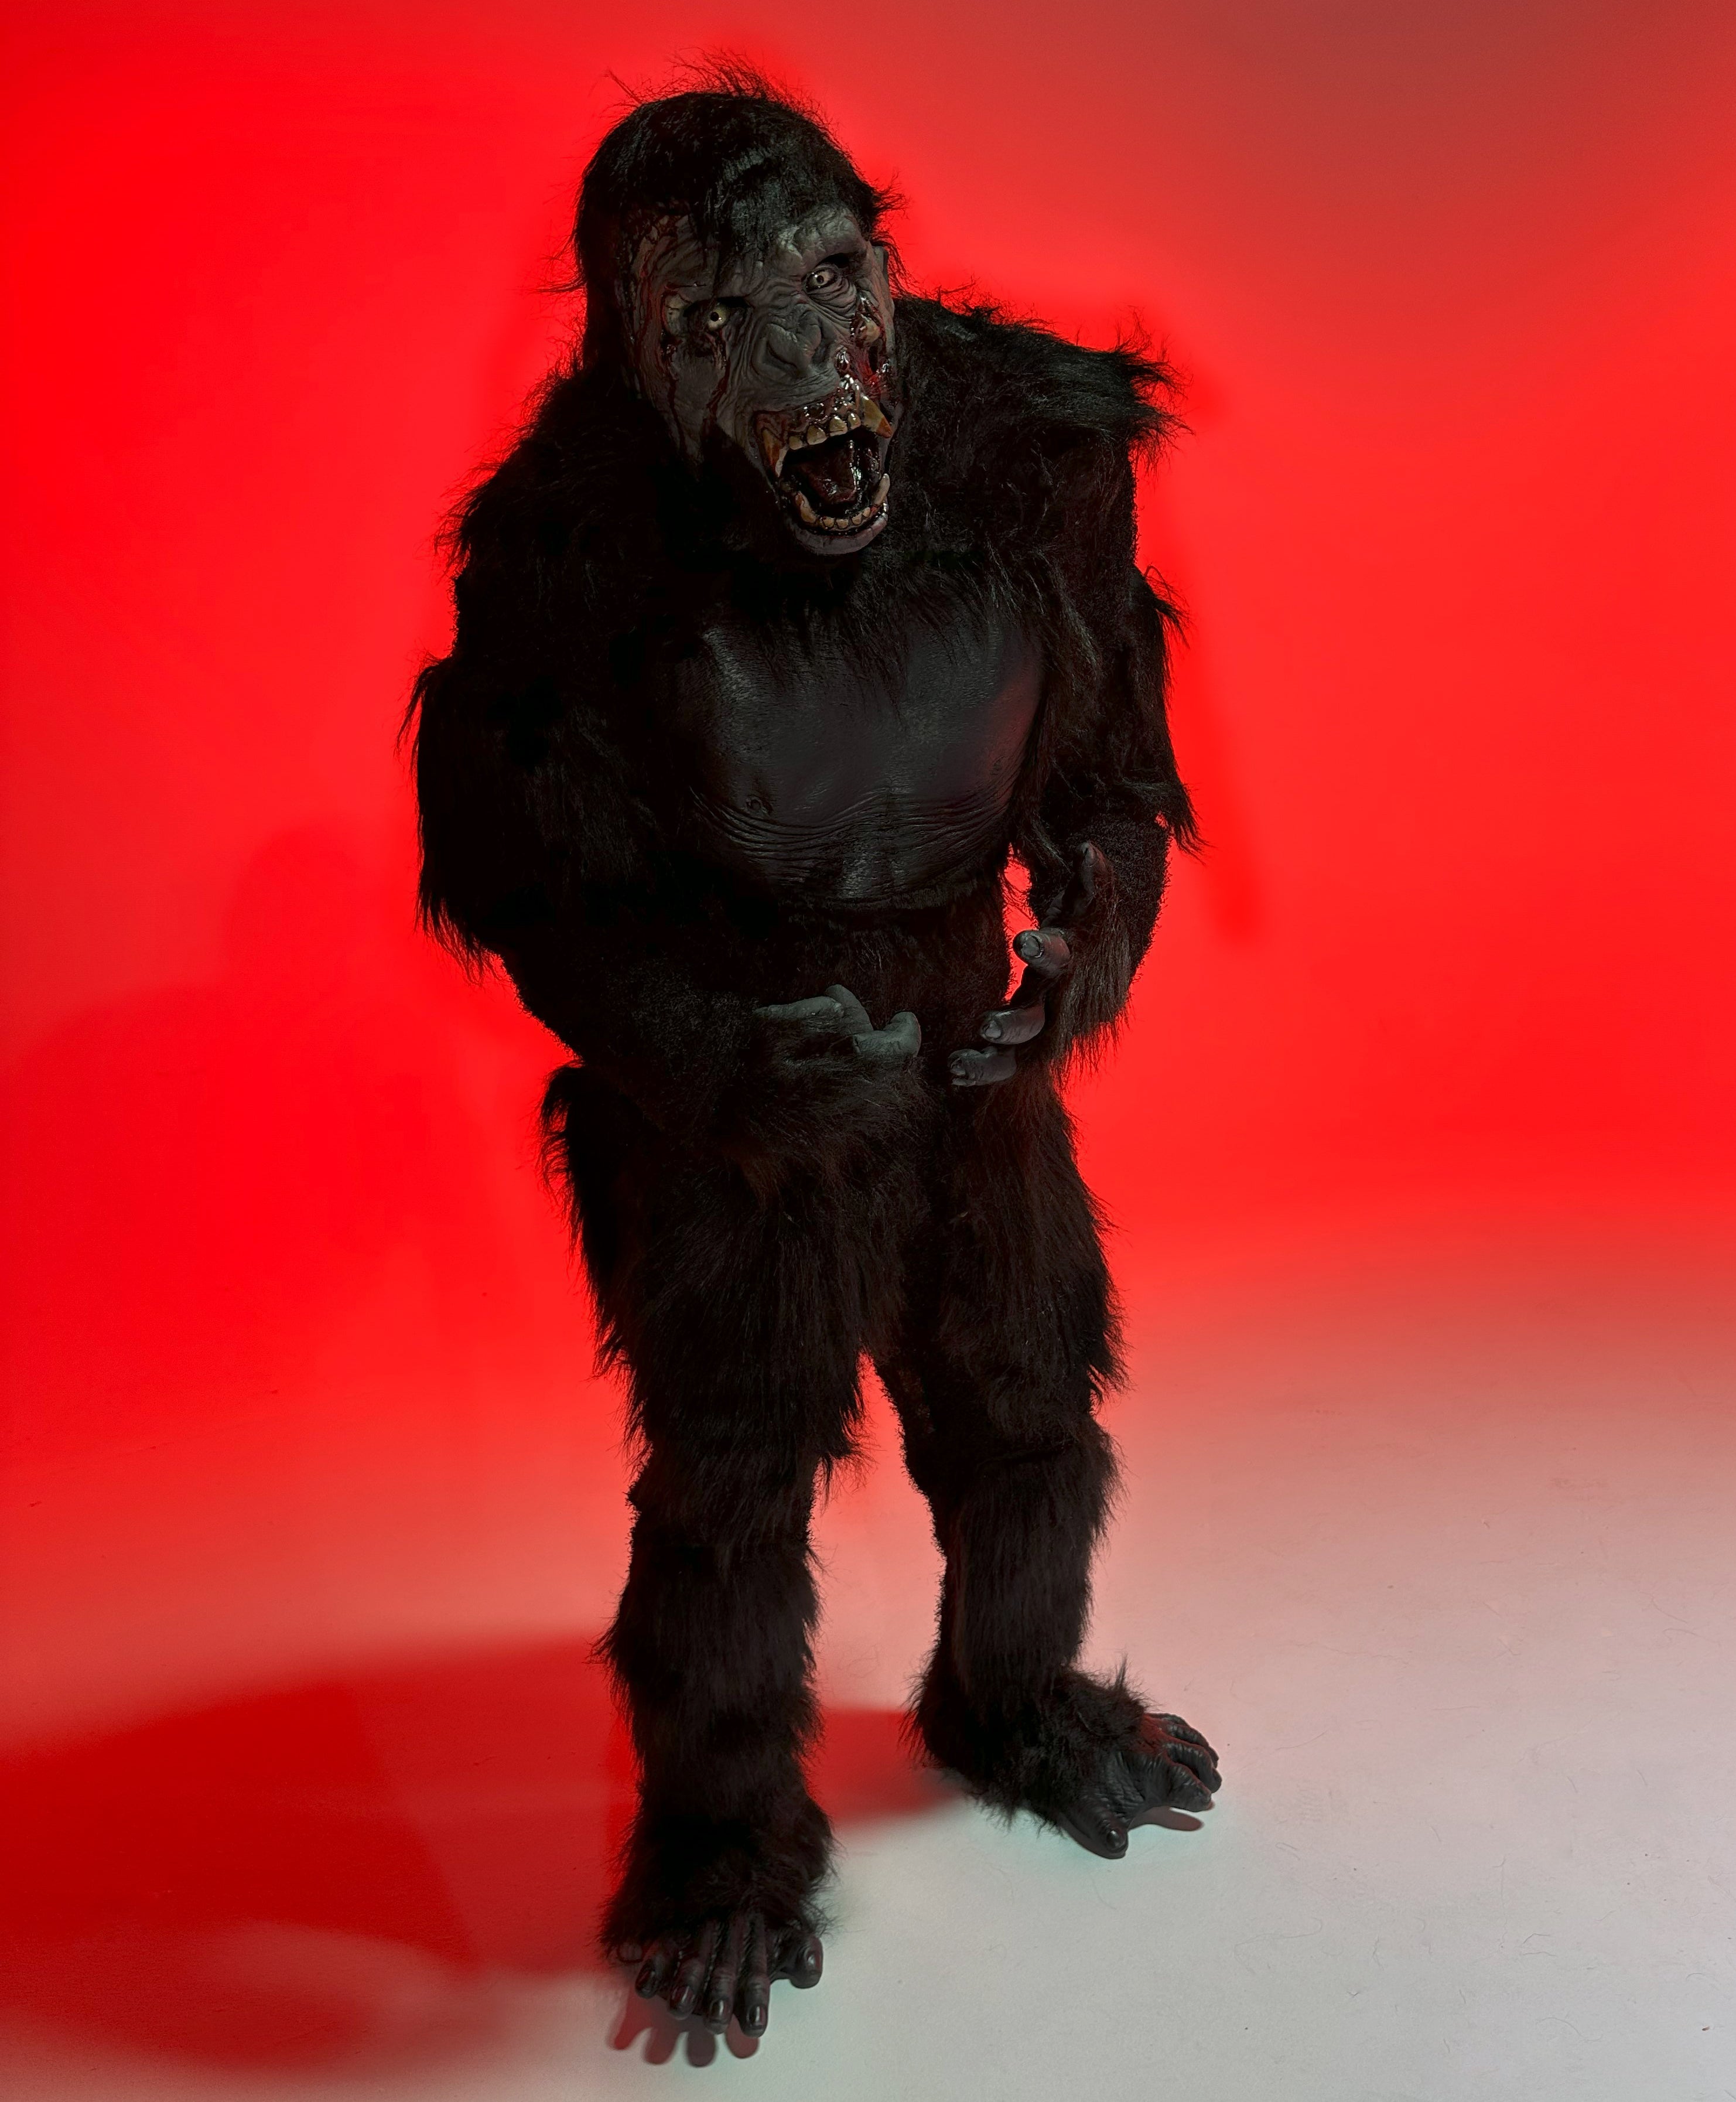 "Zombie Gorilla" HD Studios Pro Costume